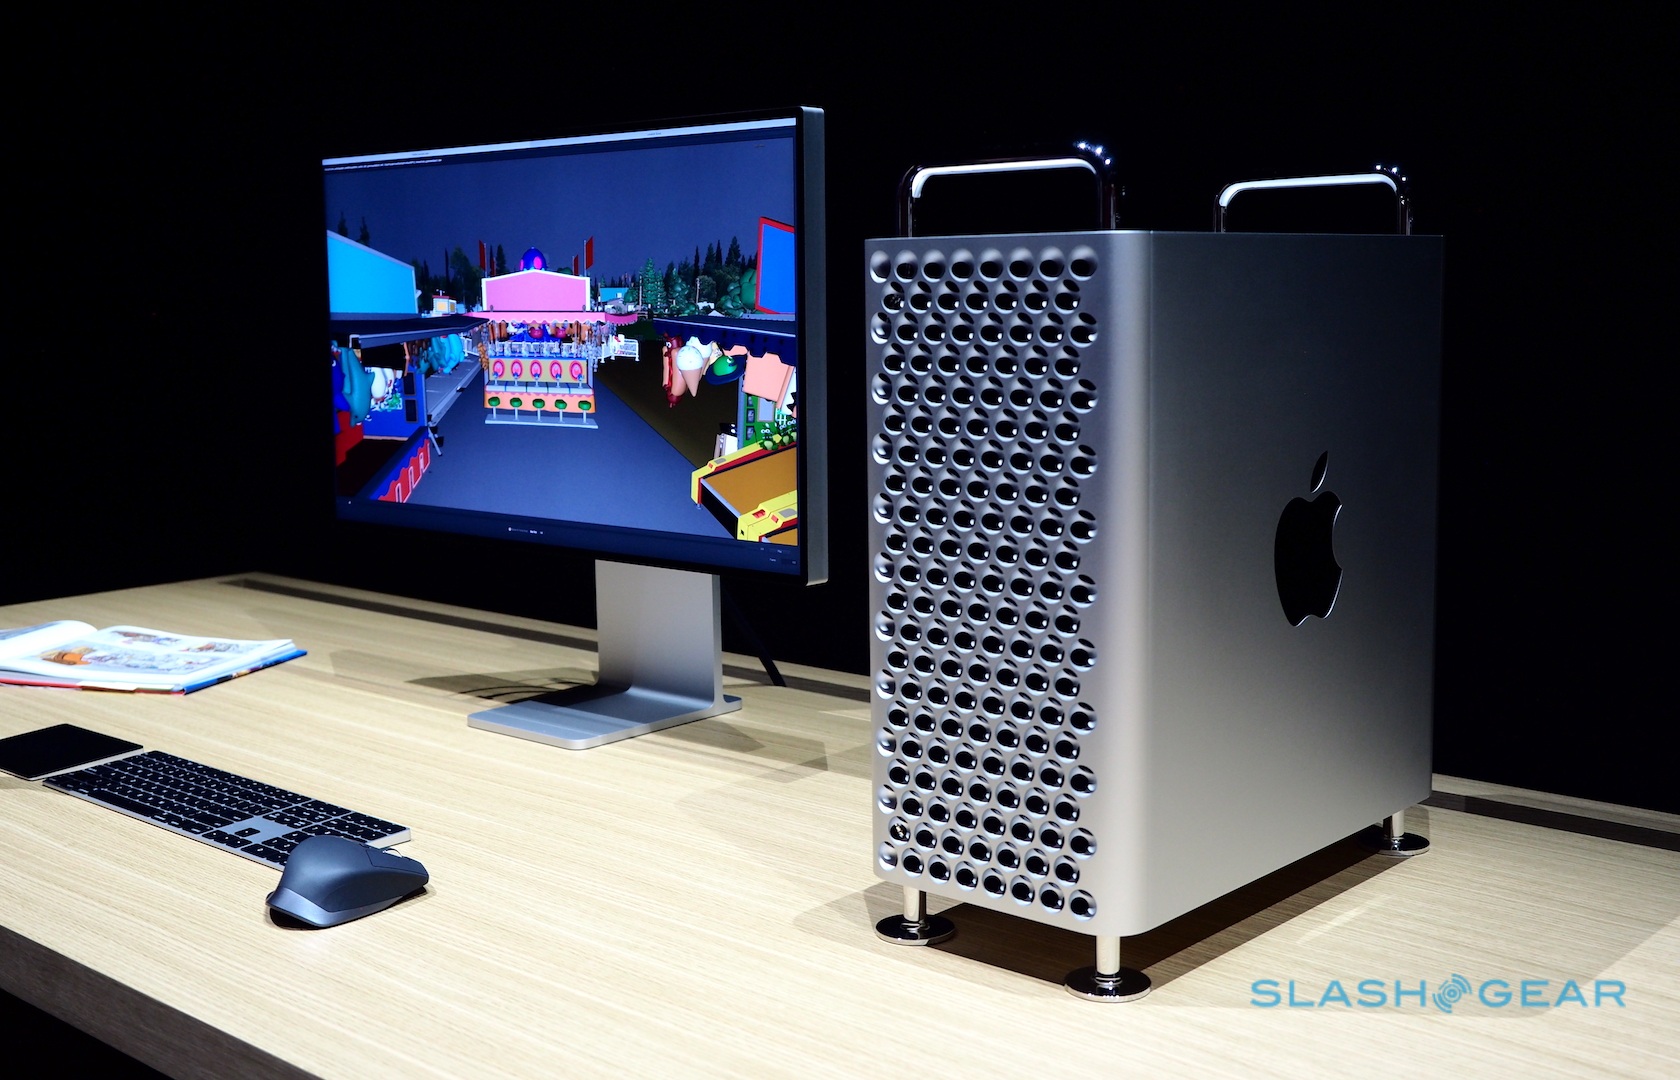 Apple Mac New